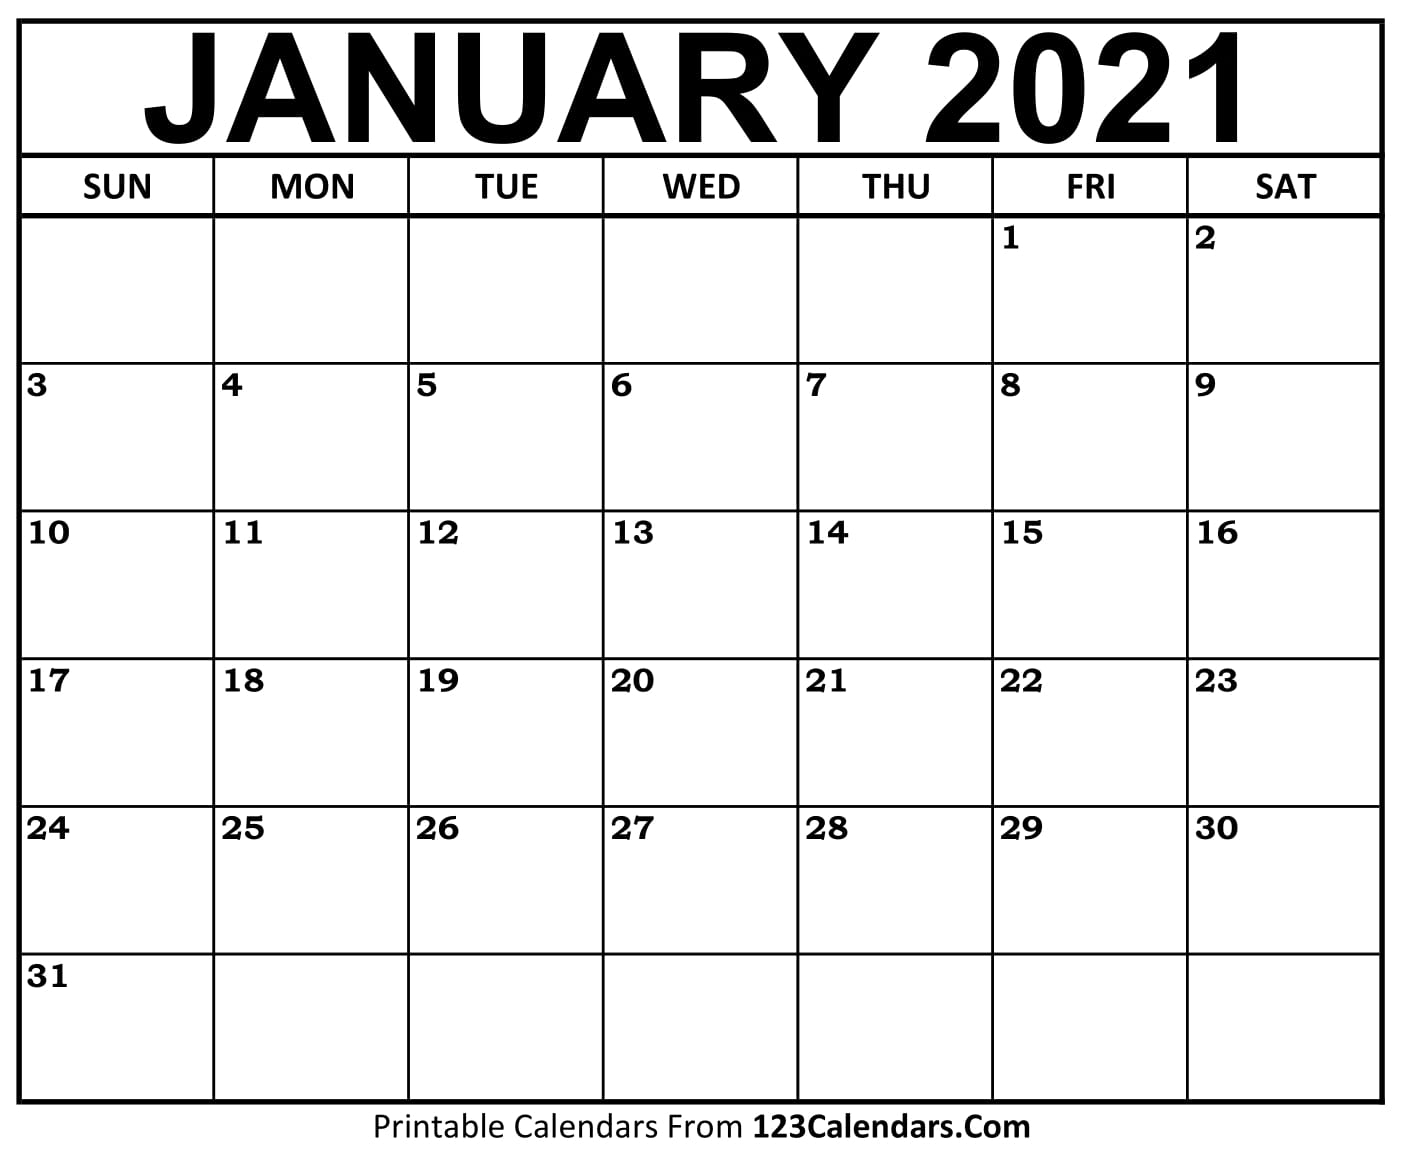 Take 2021 November Calendar Free Image